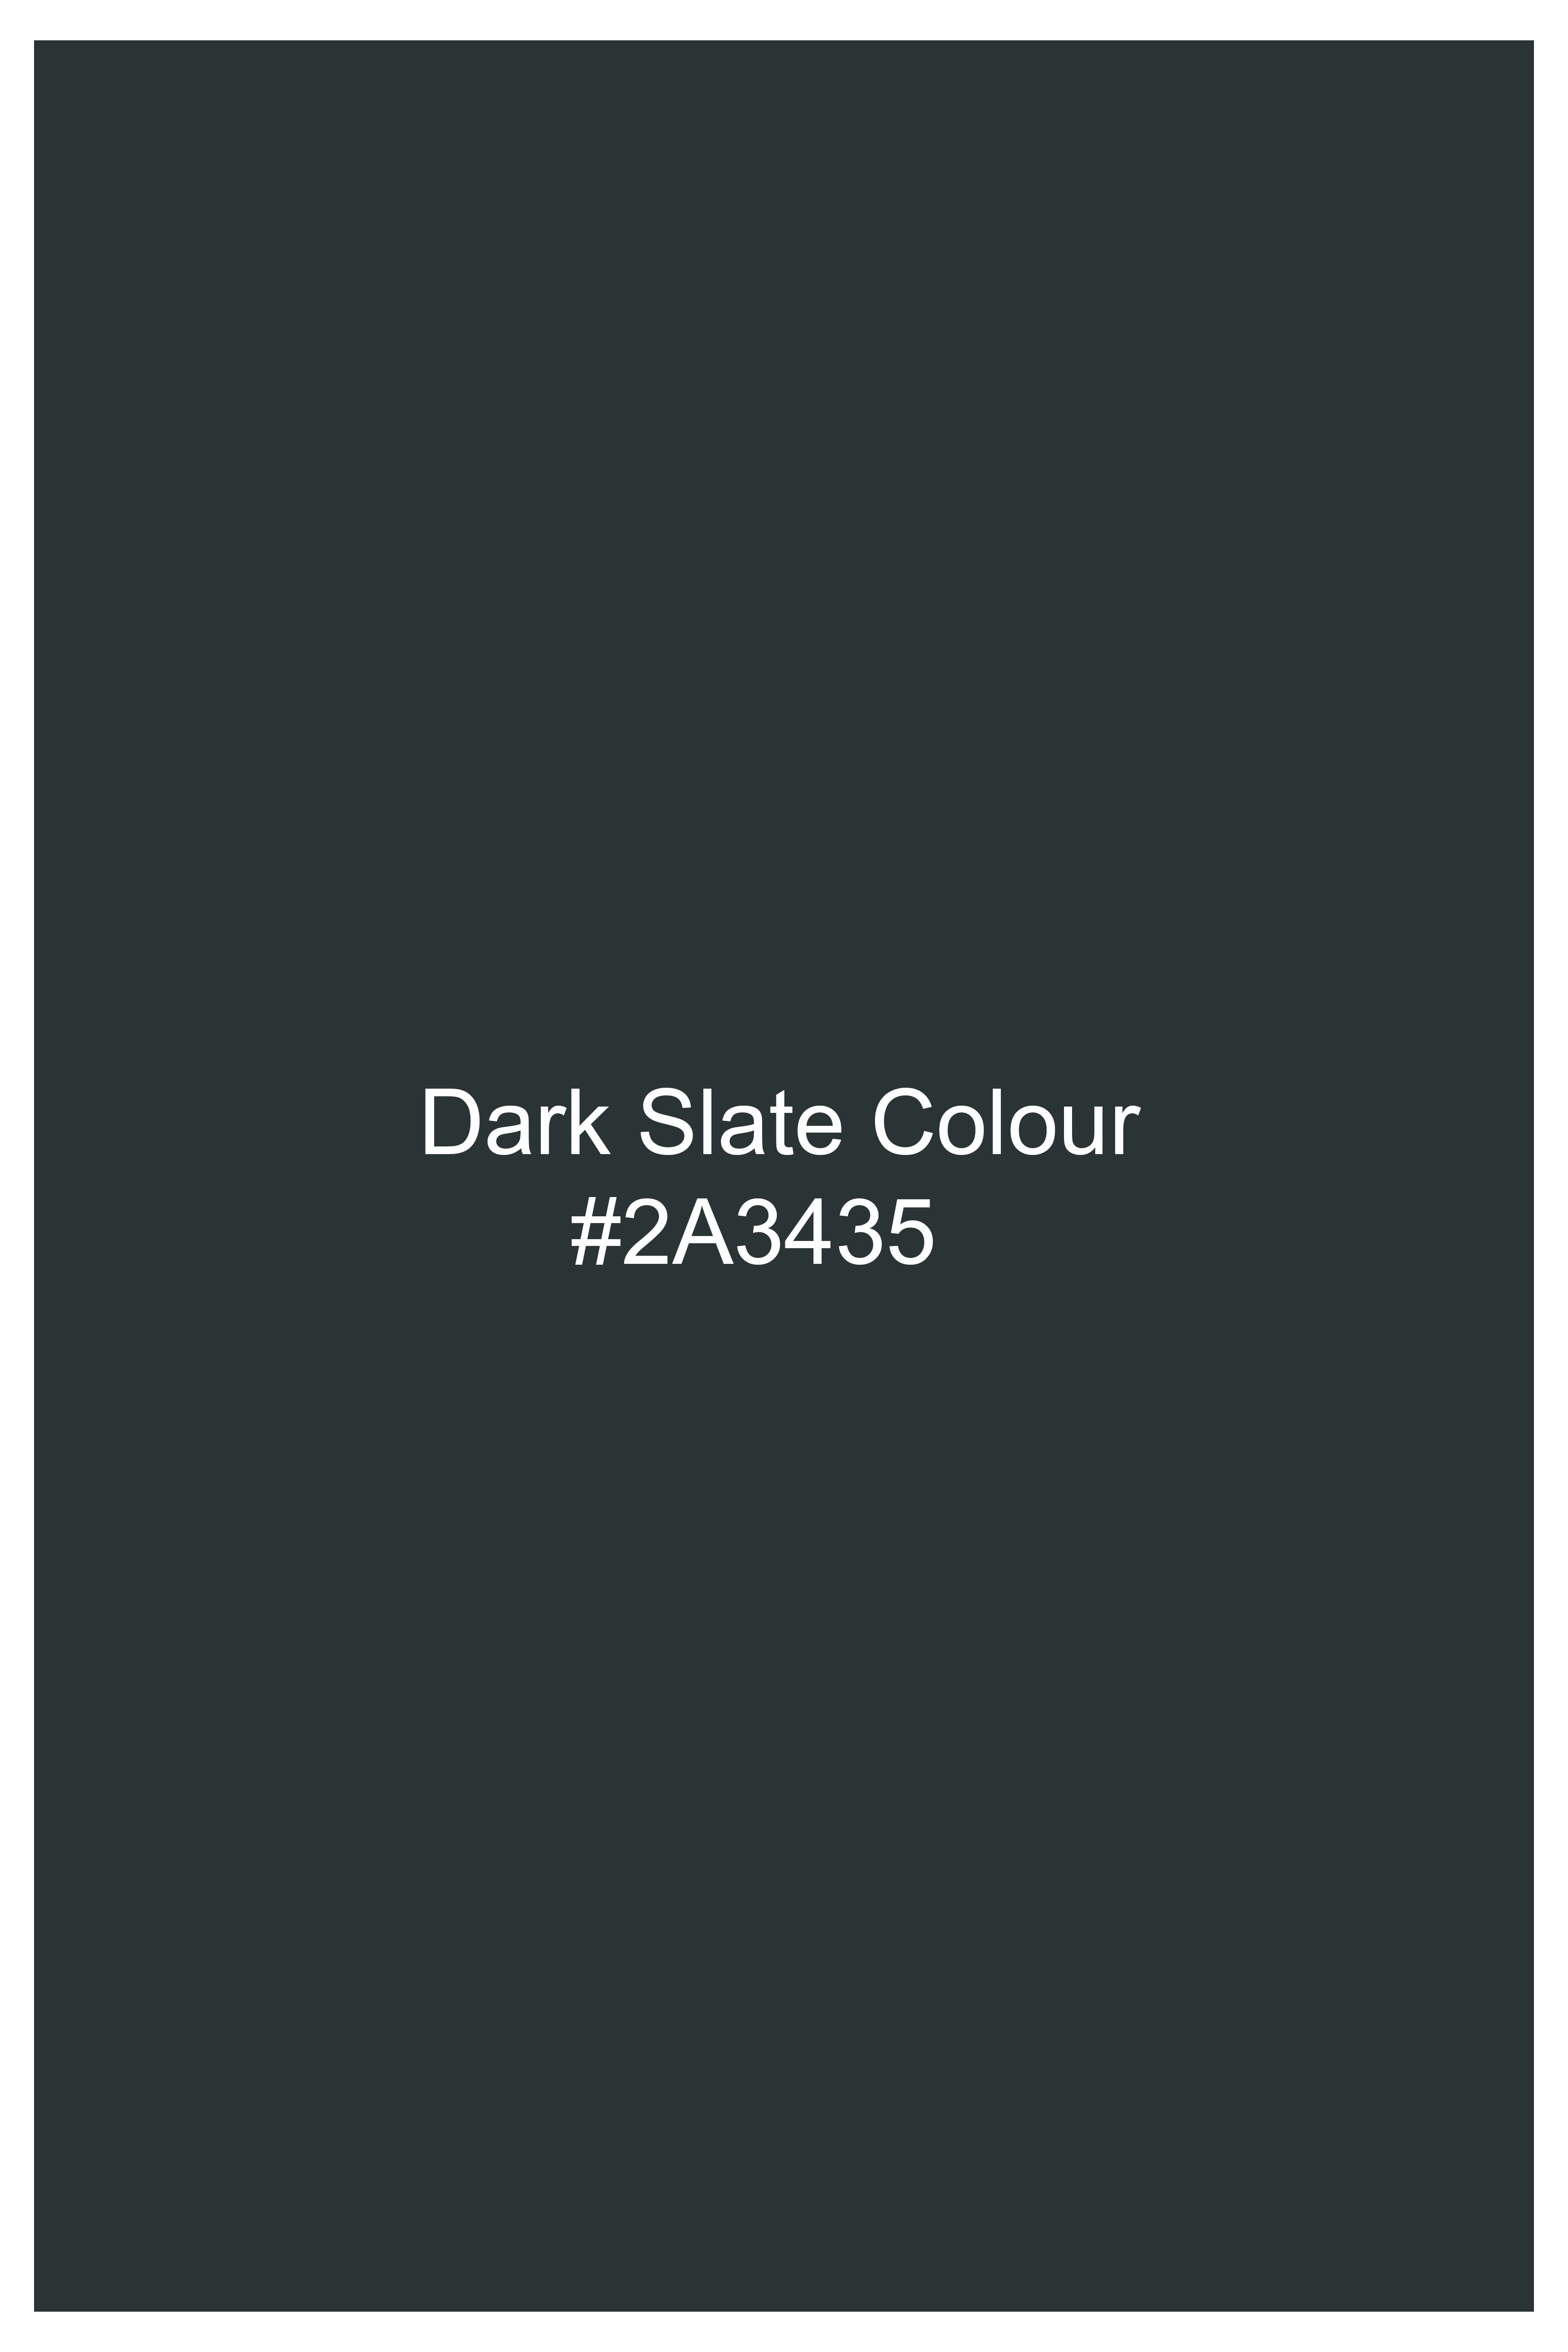 Dark Slate Green with Horizontal Stitched Wool Rich Bandhgala Designer Blazer BL3035-BG-D168-36, BL3035-BG-D168-38, BL3035-BG-D168-40, BL3035-BG-D168-42, BL3035-BG-D168-44, BL3035-BG-D168-46, BL3035-BG-D168-48, BL3035-BG-D168-50, BL3035-BG-D168-52, BL3035-BG-D168-54, BL3035-BG-D168-56, BL3035-BG-D168-58, BL3035-BG-D168-60